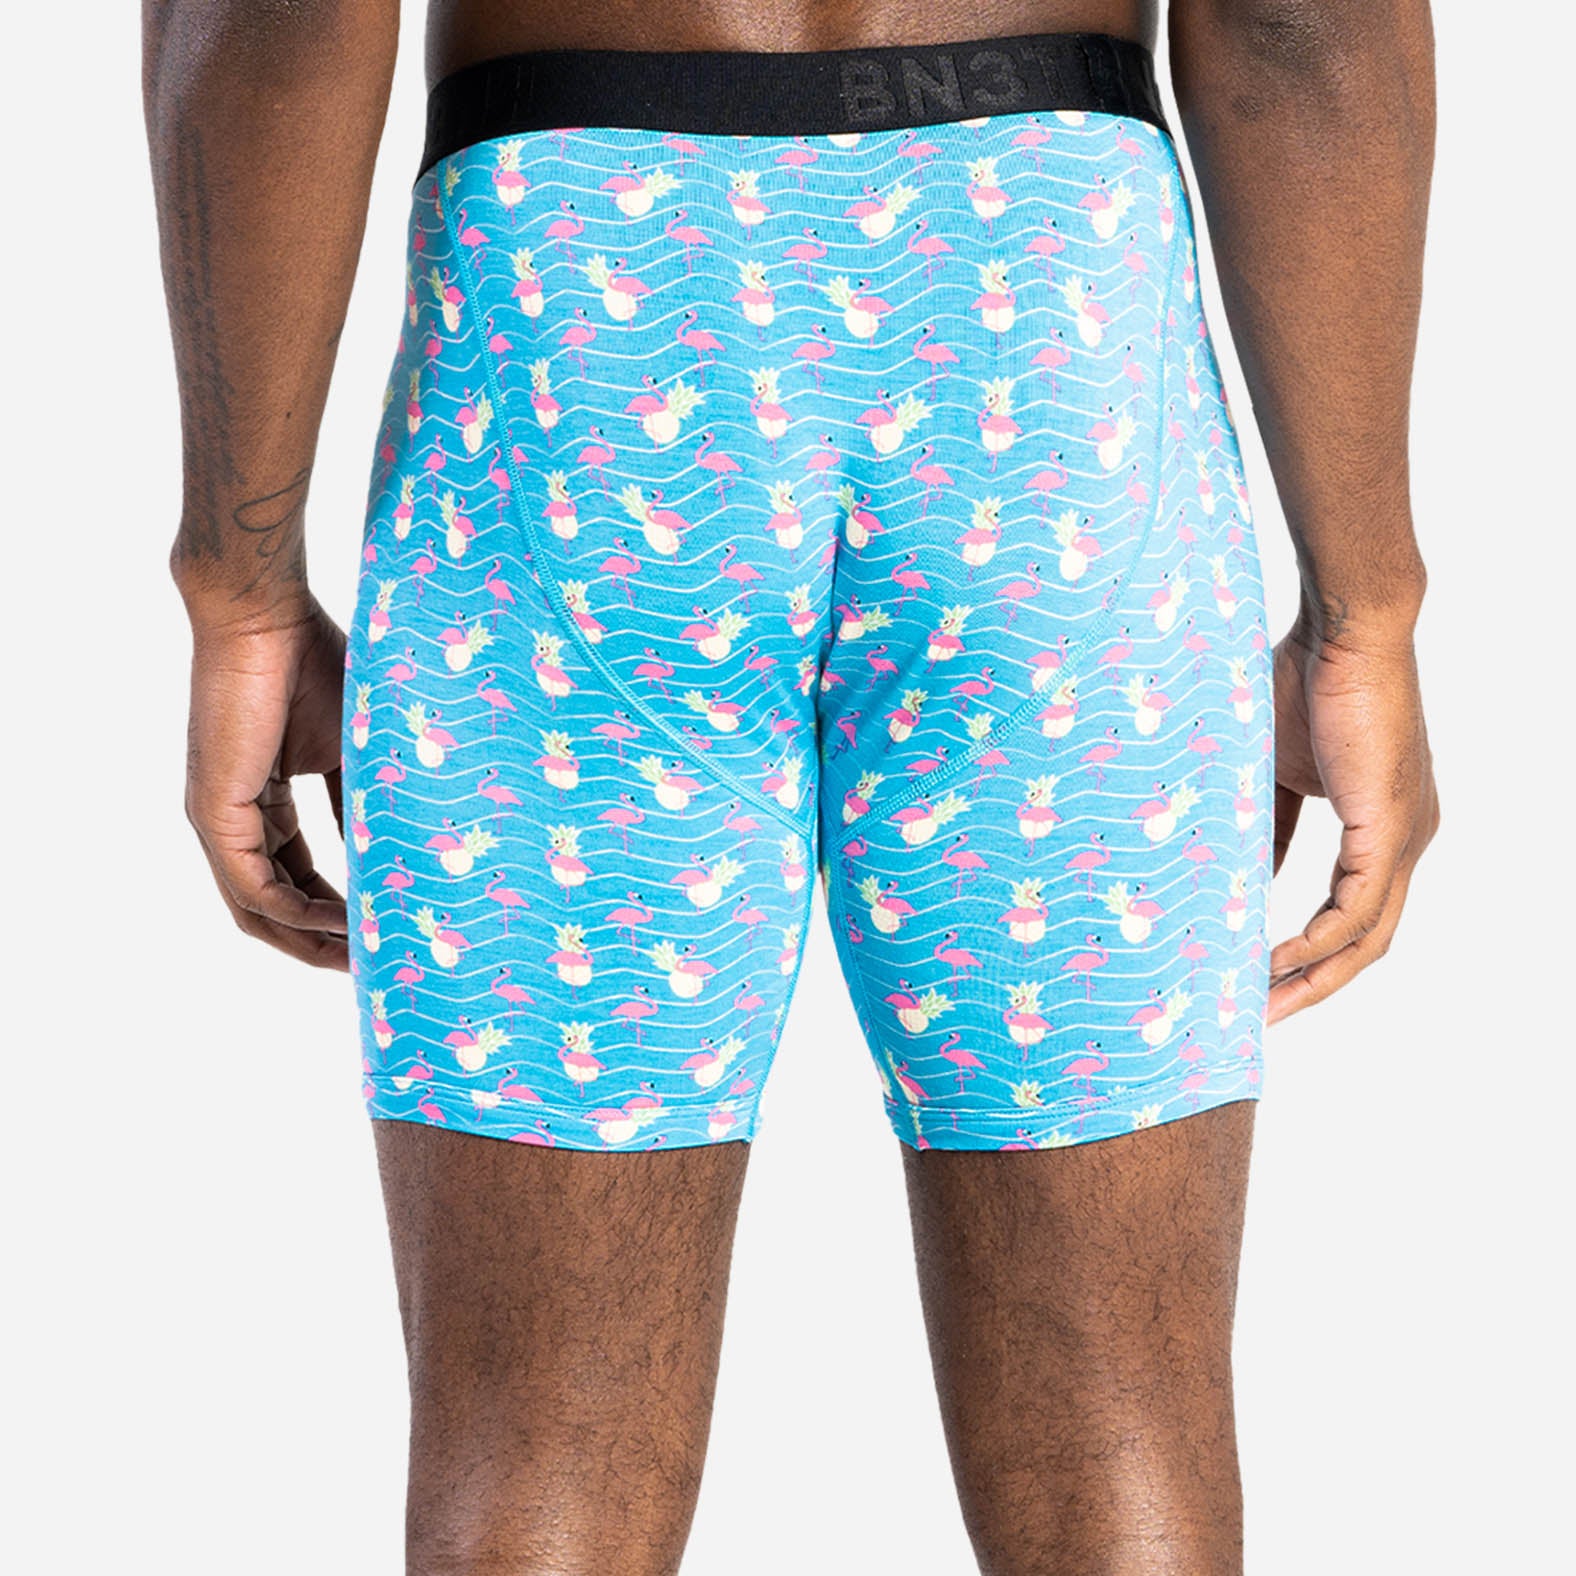  Surf Wave Wallpaper Men's Underwear Soft Boxer Briefs High  Waist Stretch Trunks Panty : Sports & Outdoors